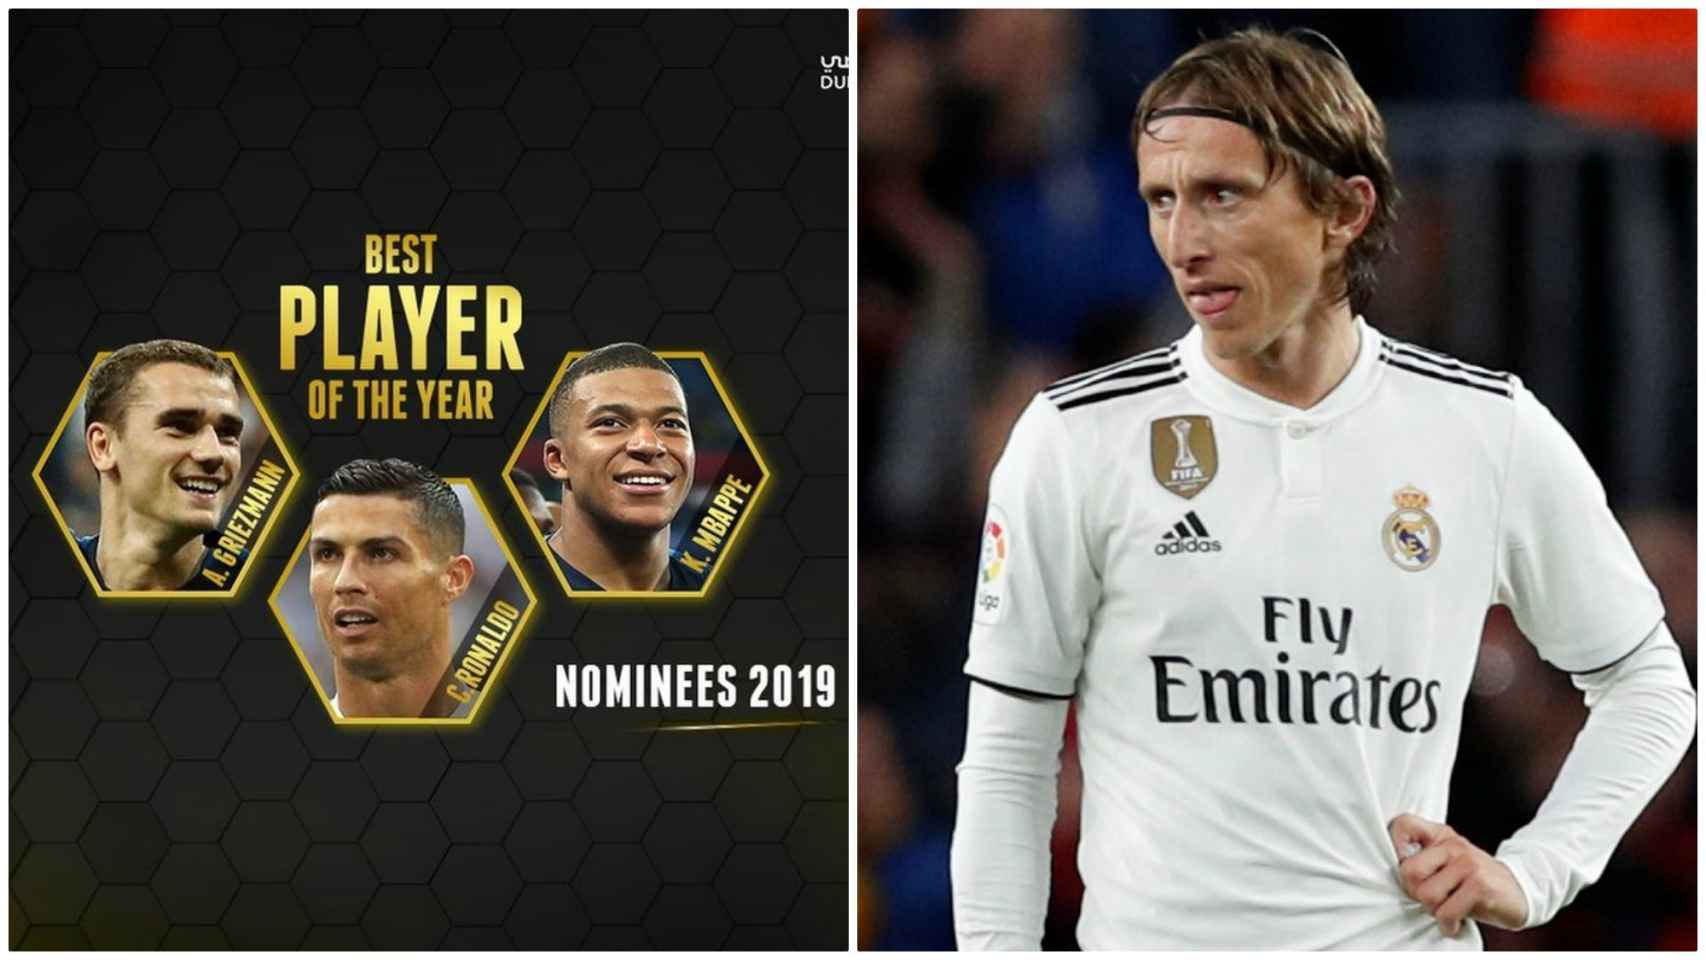 Los Globe Soccer Awards ningunean a Modric